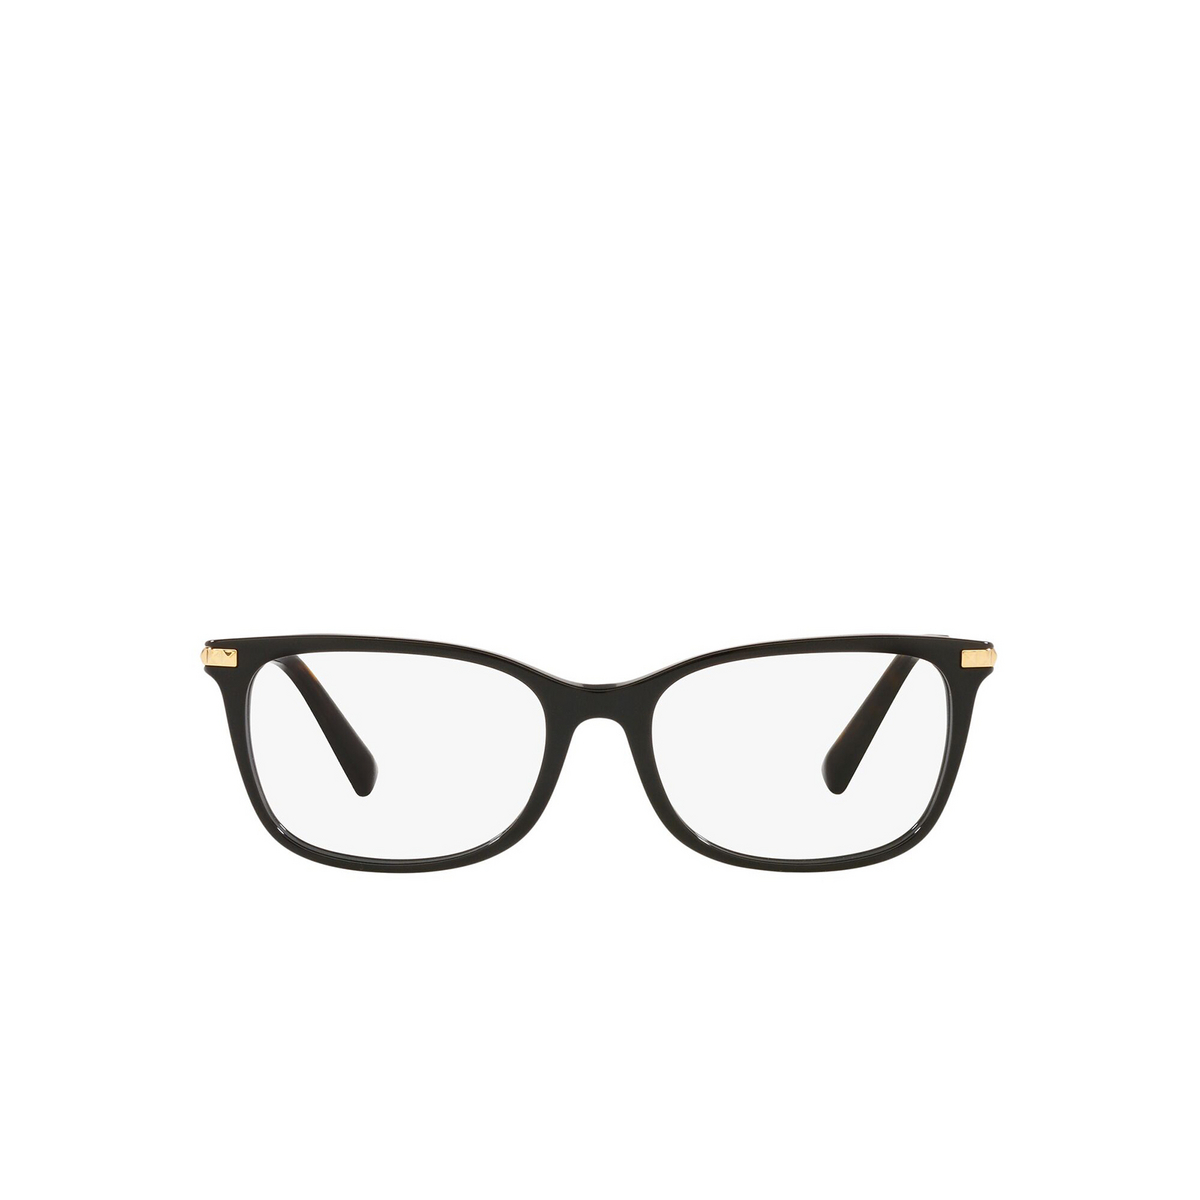 Valentino® Square Eyeglasses: VA3074 color Black 5001 - front view.